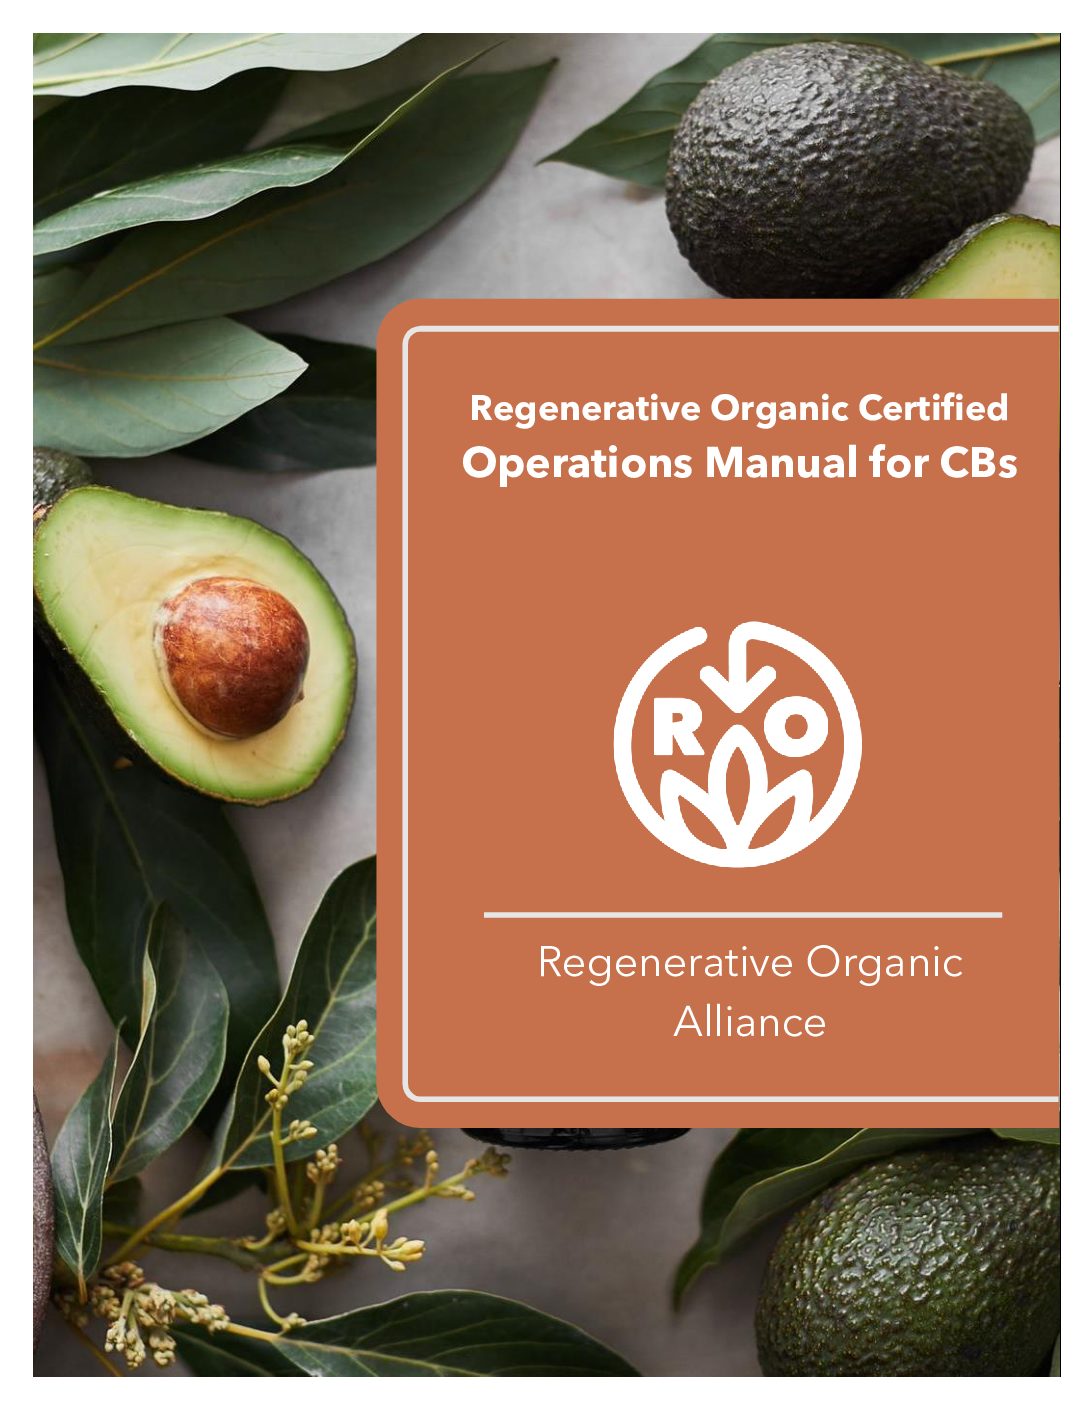 Regenerative Organic Certified